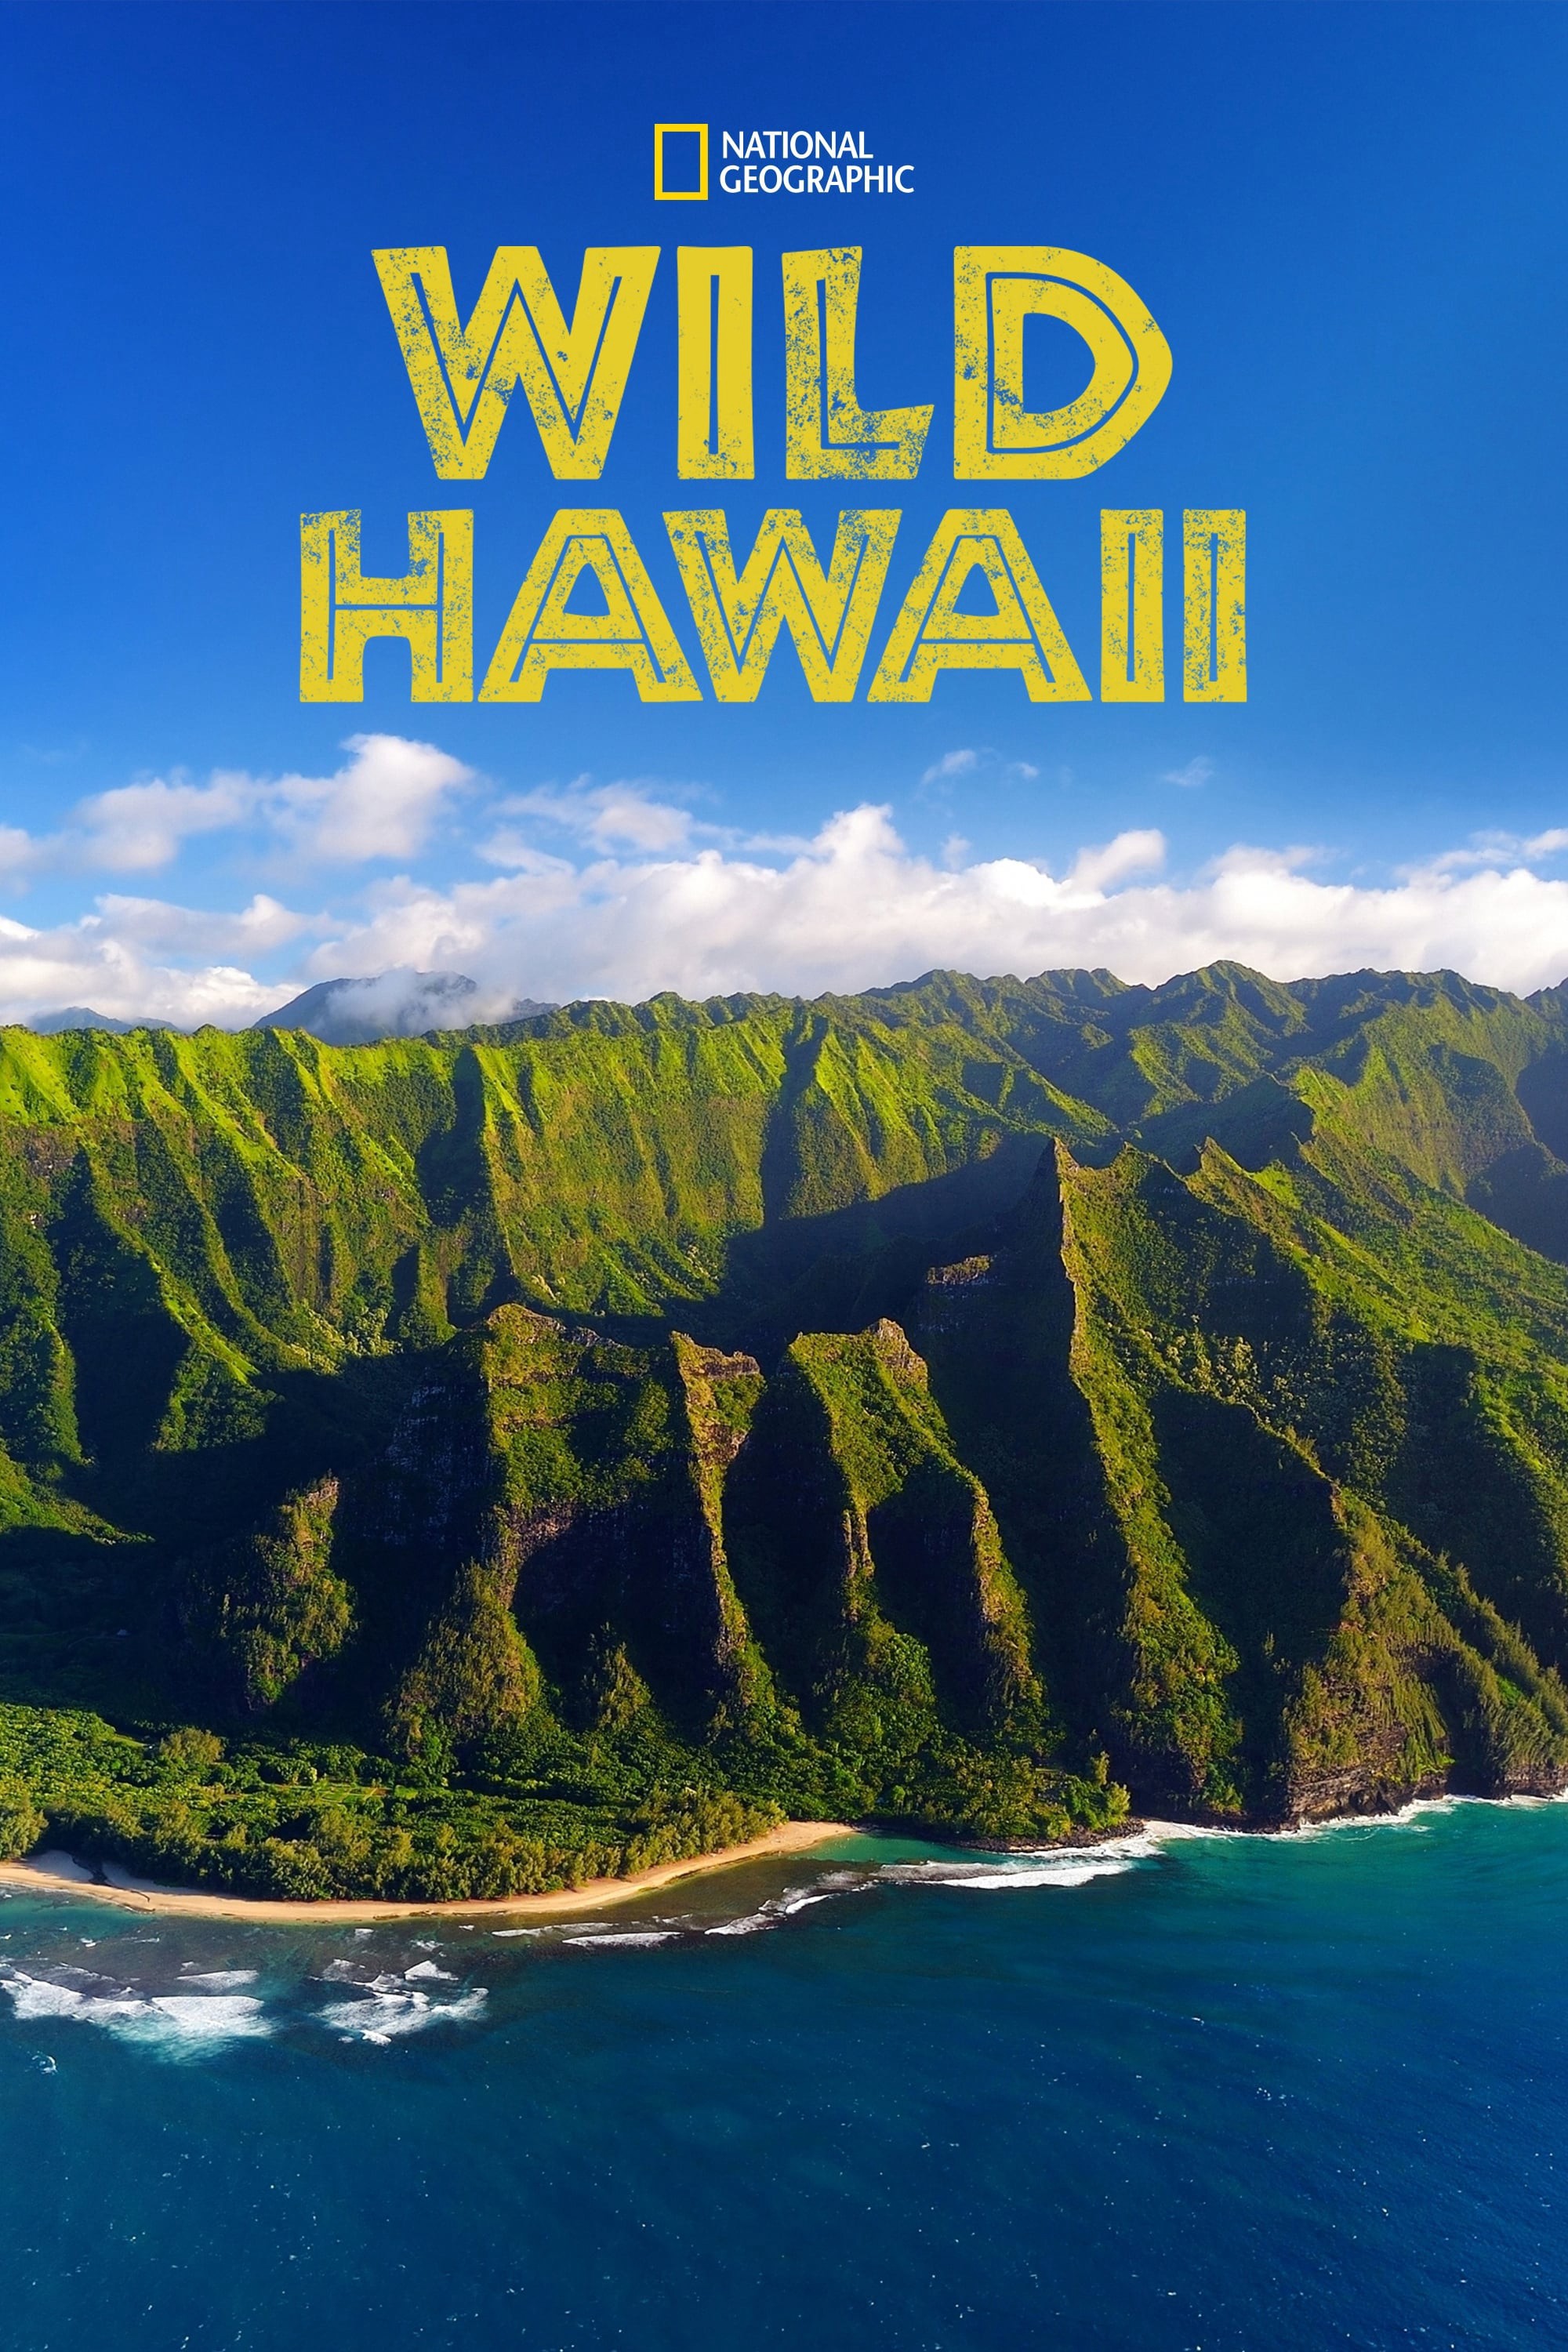 Thiên Nhiên Hoang Dã Hawaii - Thiên Nhiên Hoang Dã Hawaii